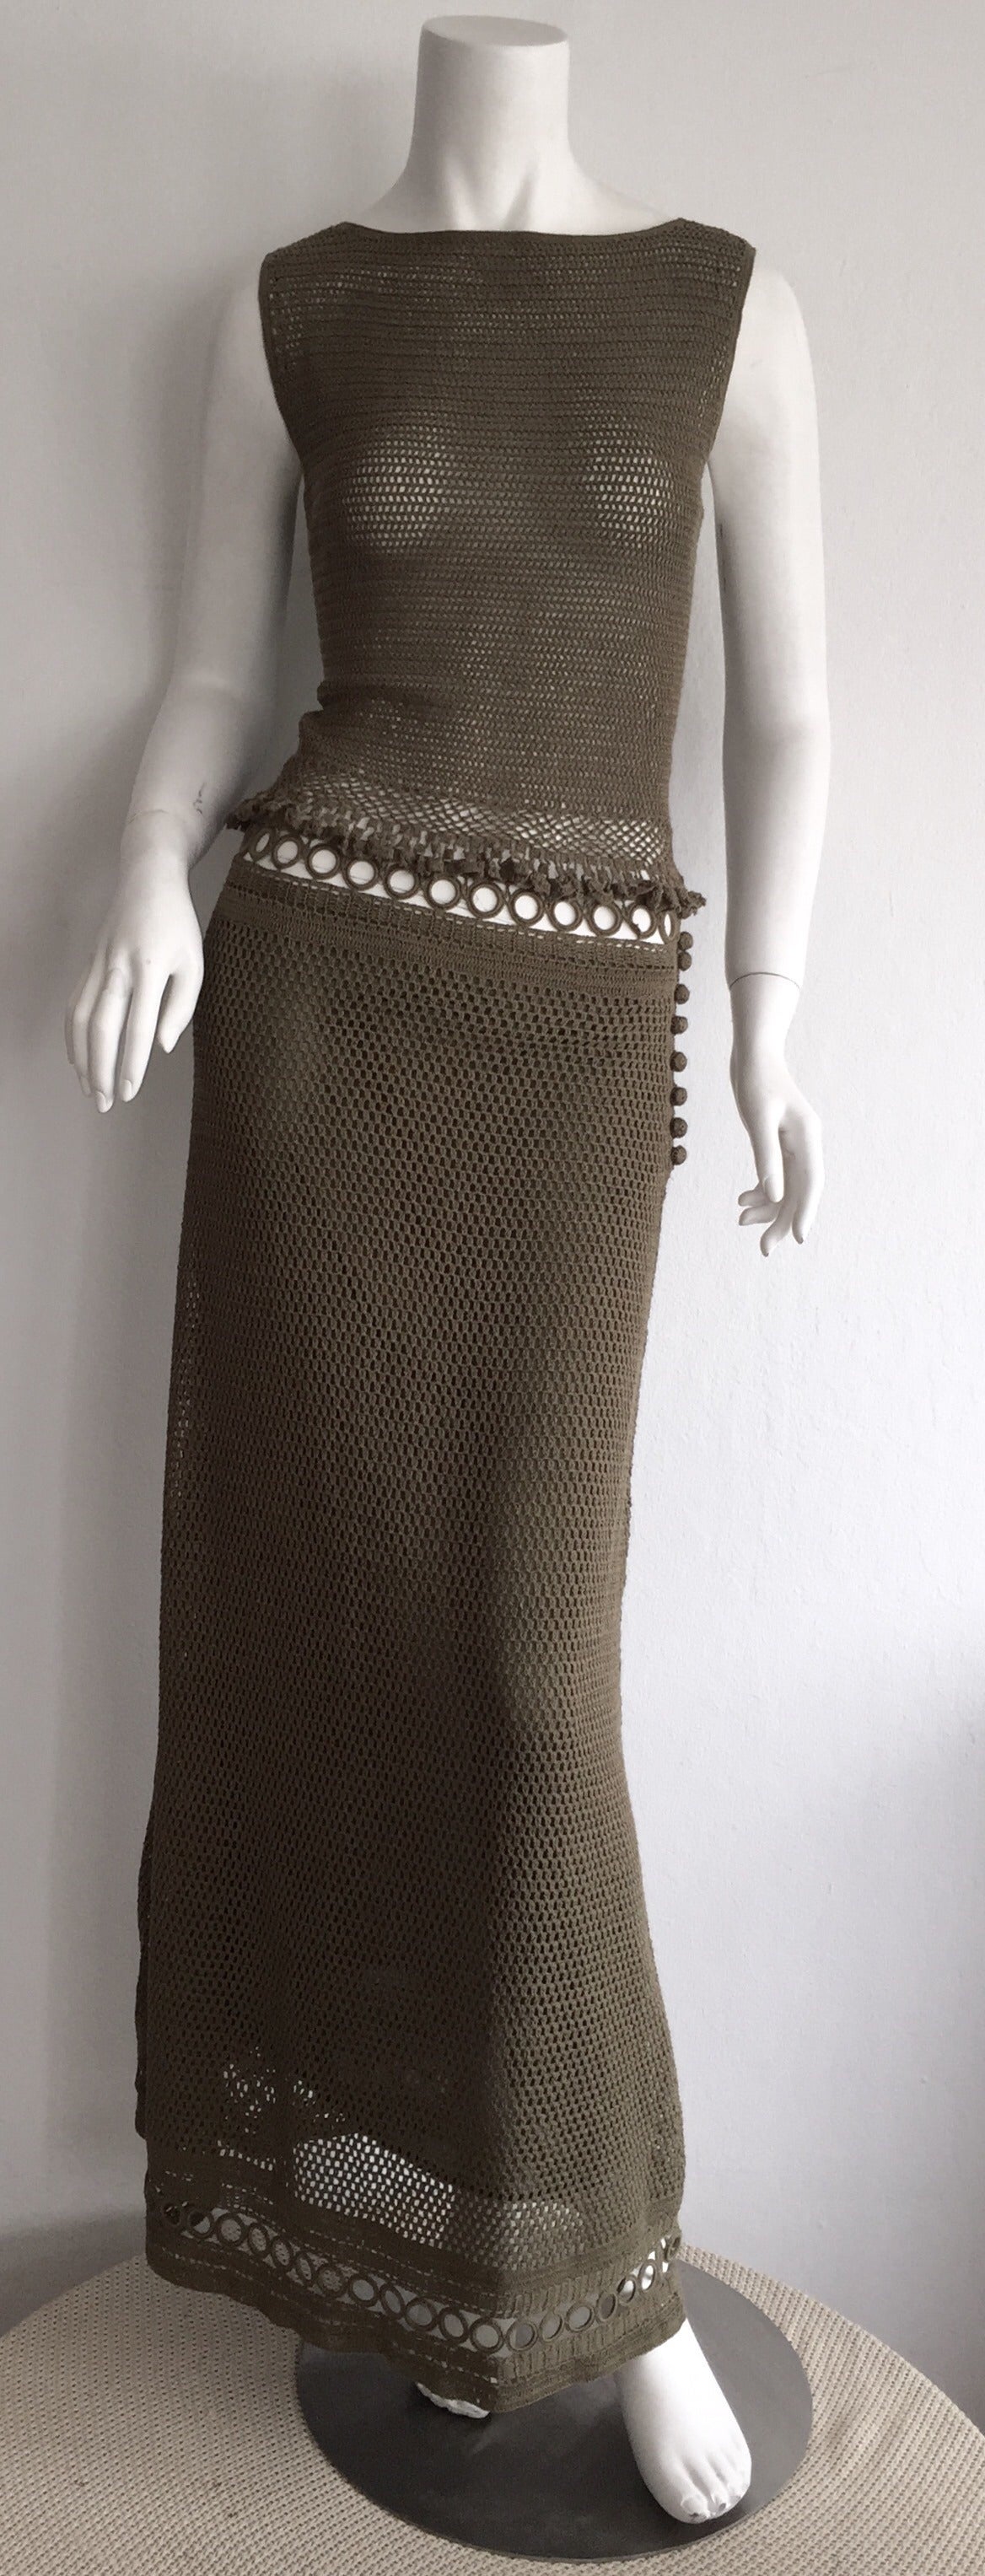 1990s Philosophy d' Alberta Ferretti Olive Green Crochet 2 Piece Dress Ensemble 5